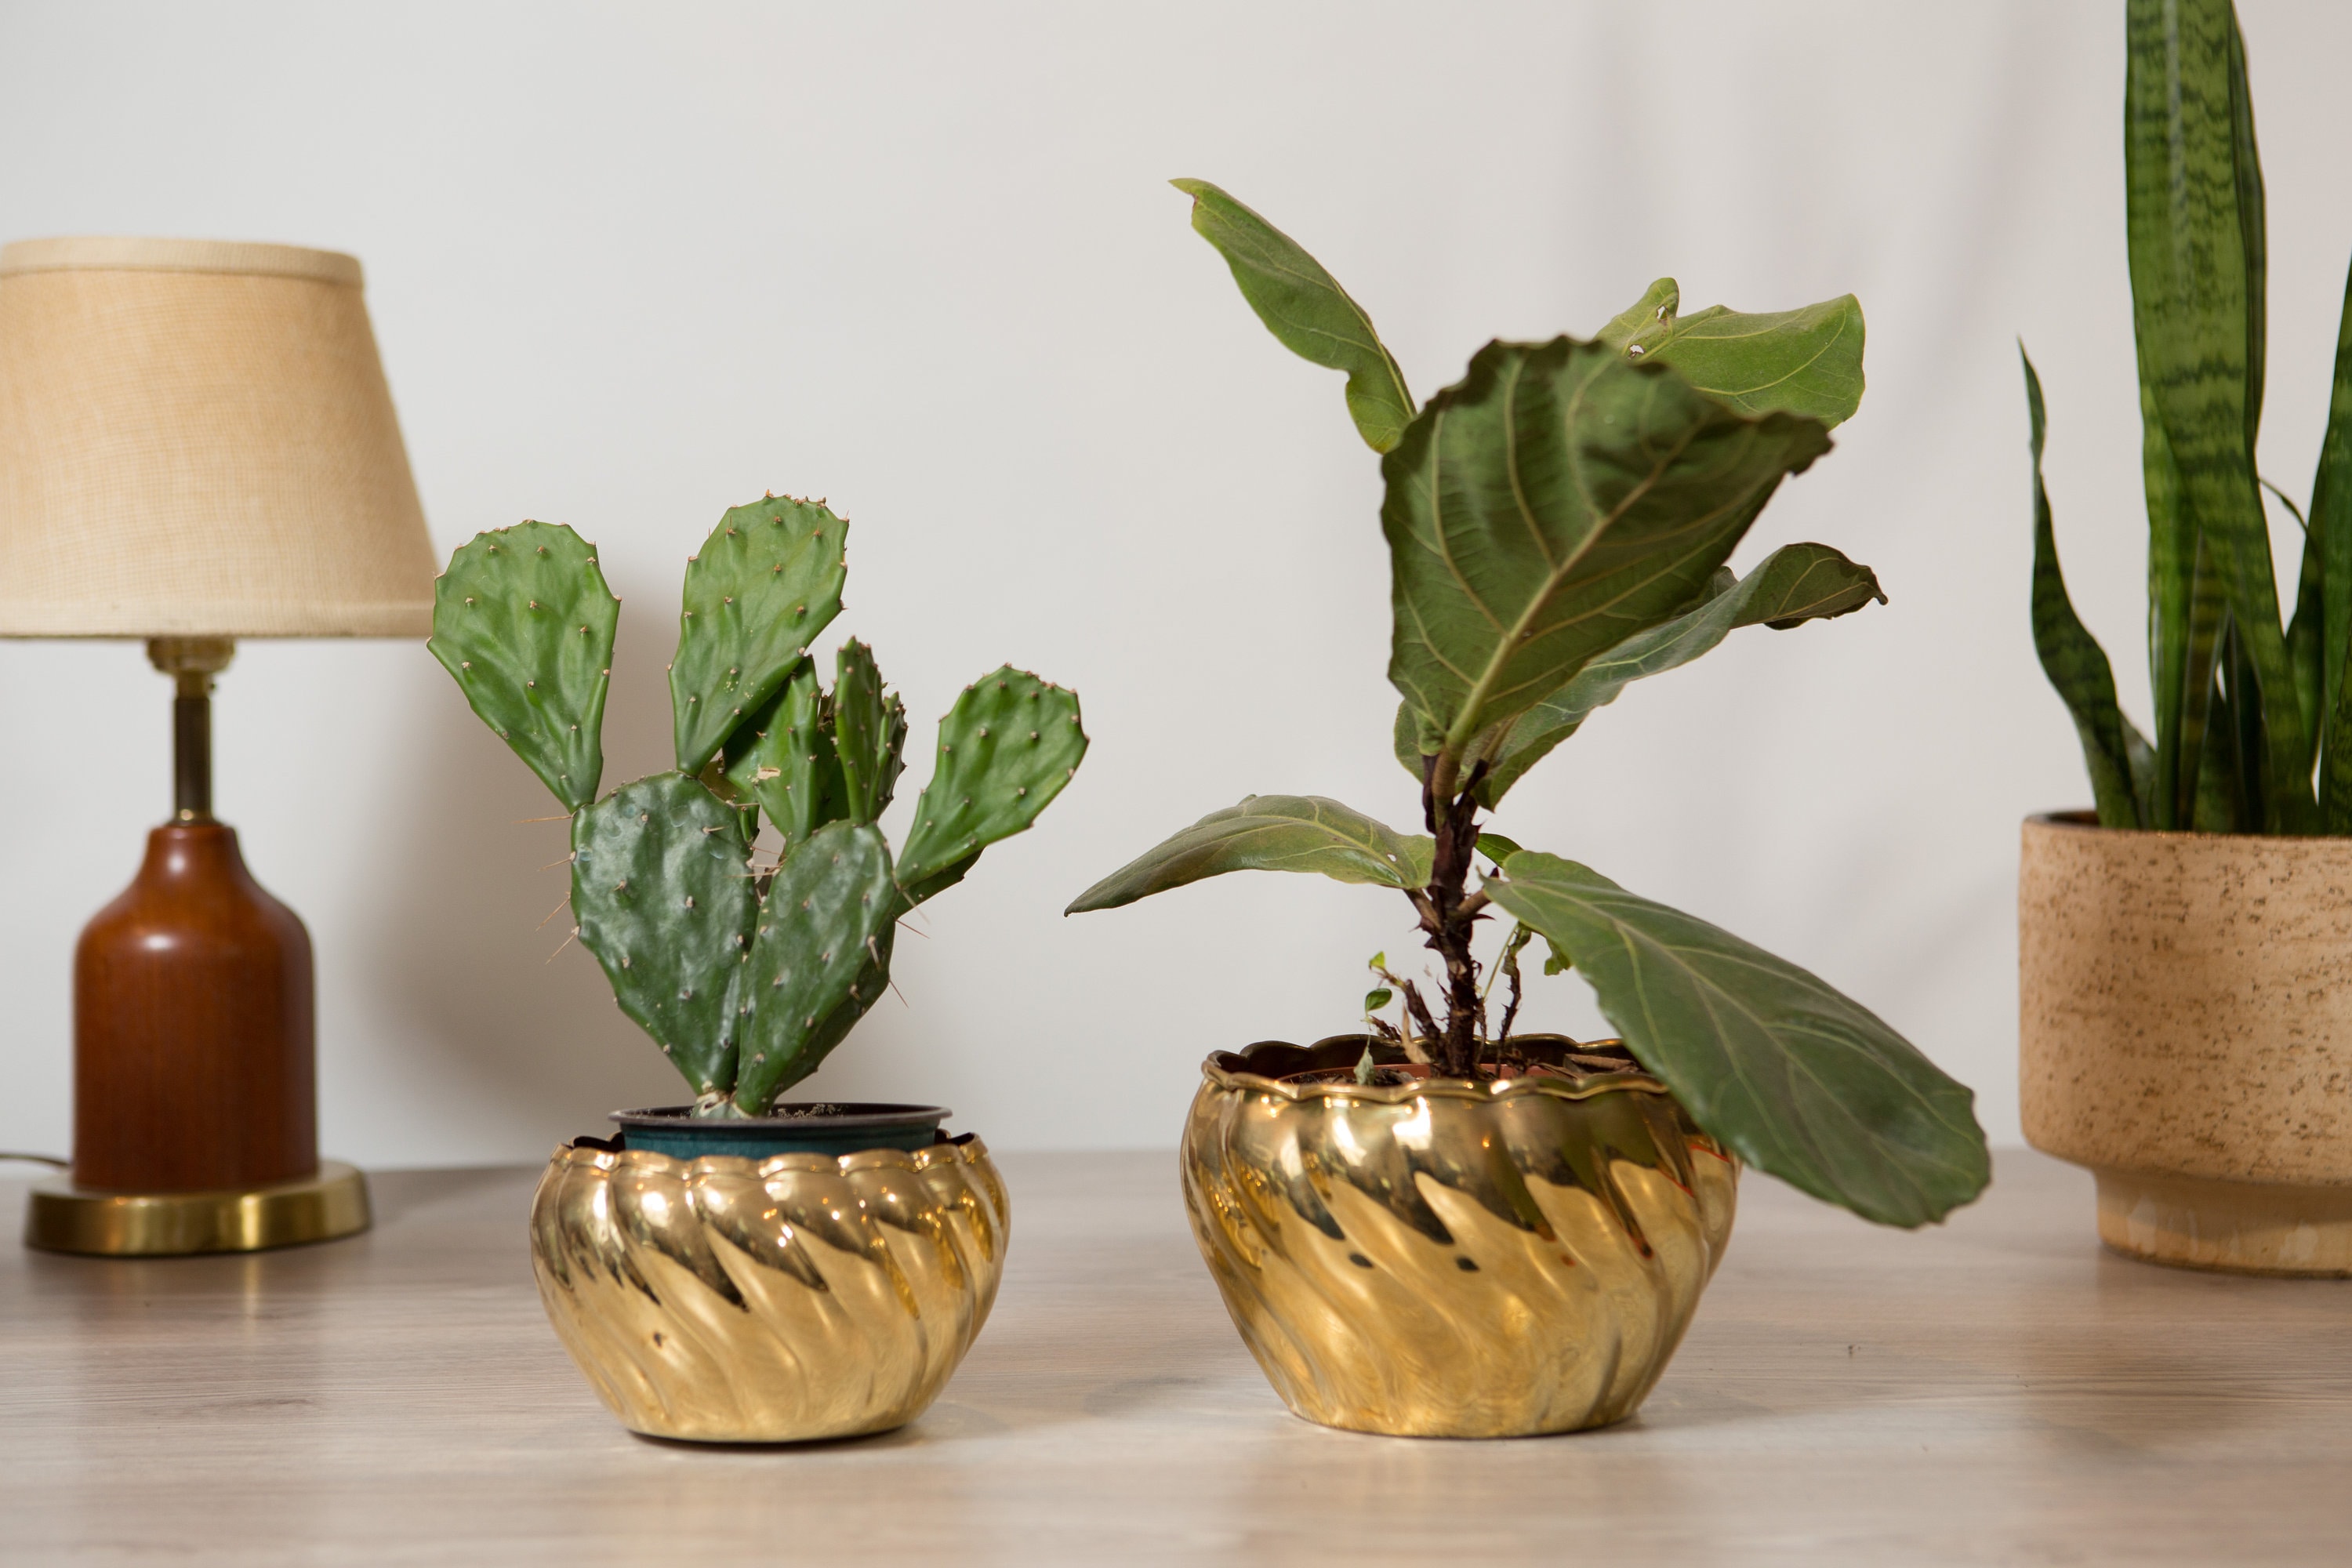 2 Vintage Brass Planters - Round Metal Scalloped Bras Pots for Succulents,  Cactus, Plants, Herbs, etc - Gold Coloured Bowls